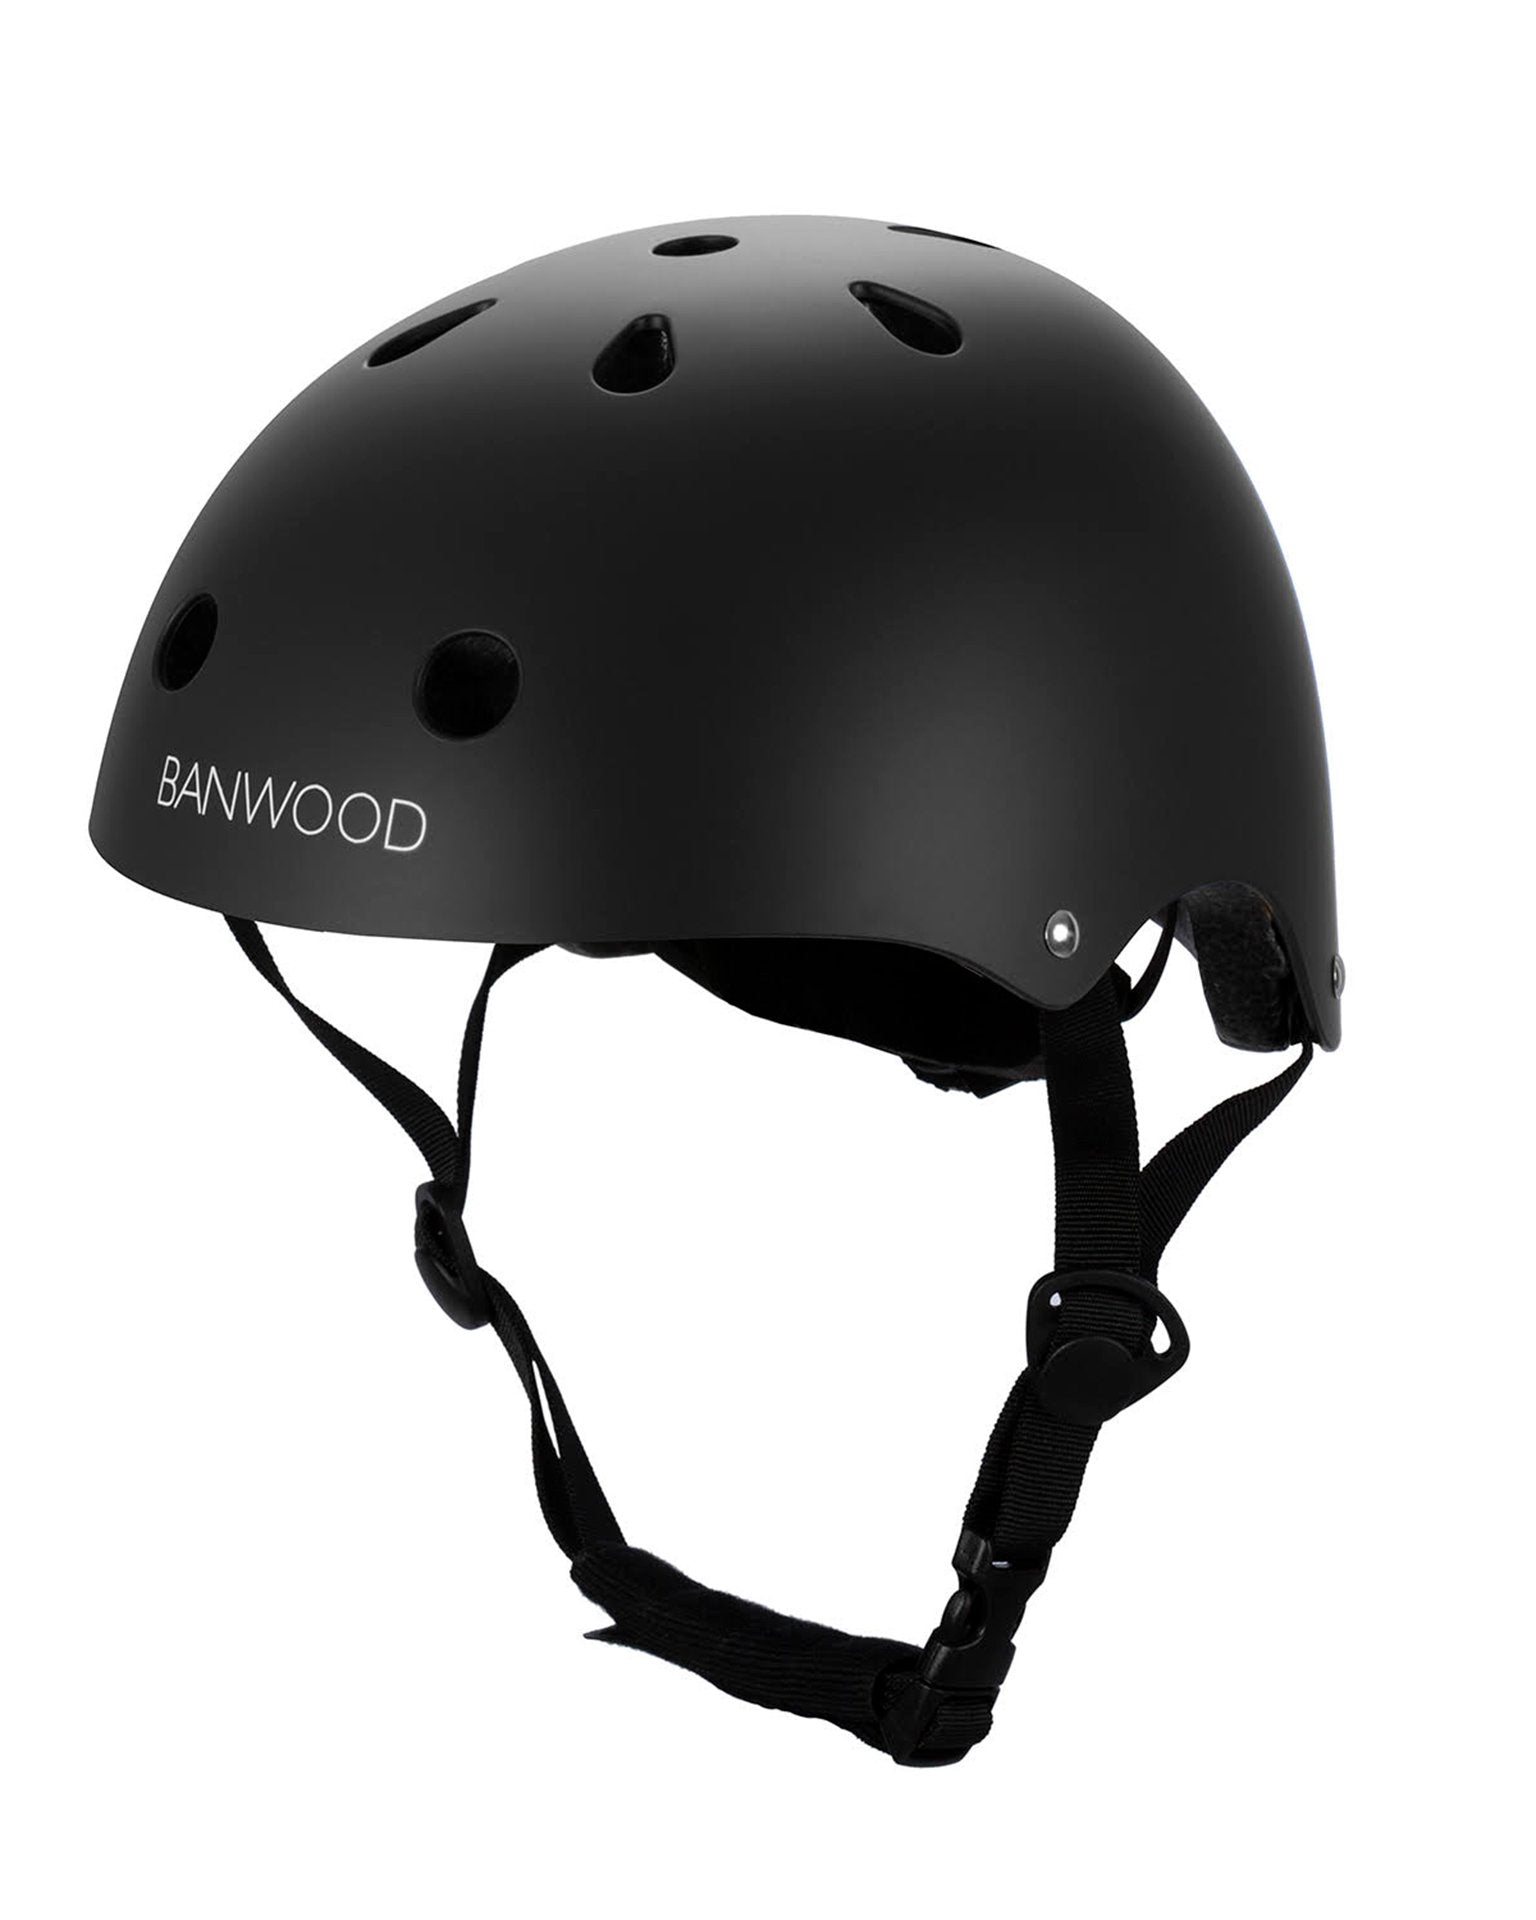 Little banwood play classic helmet in black